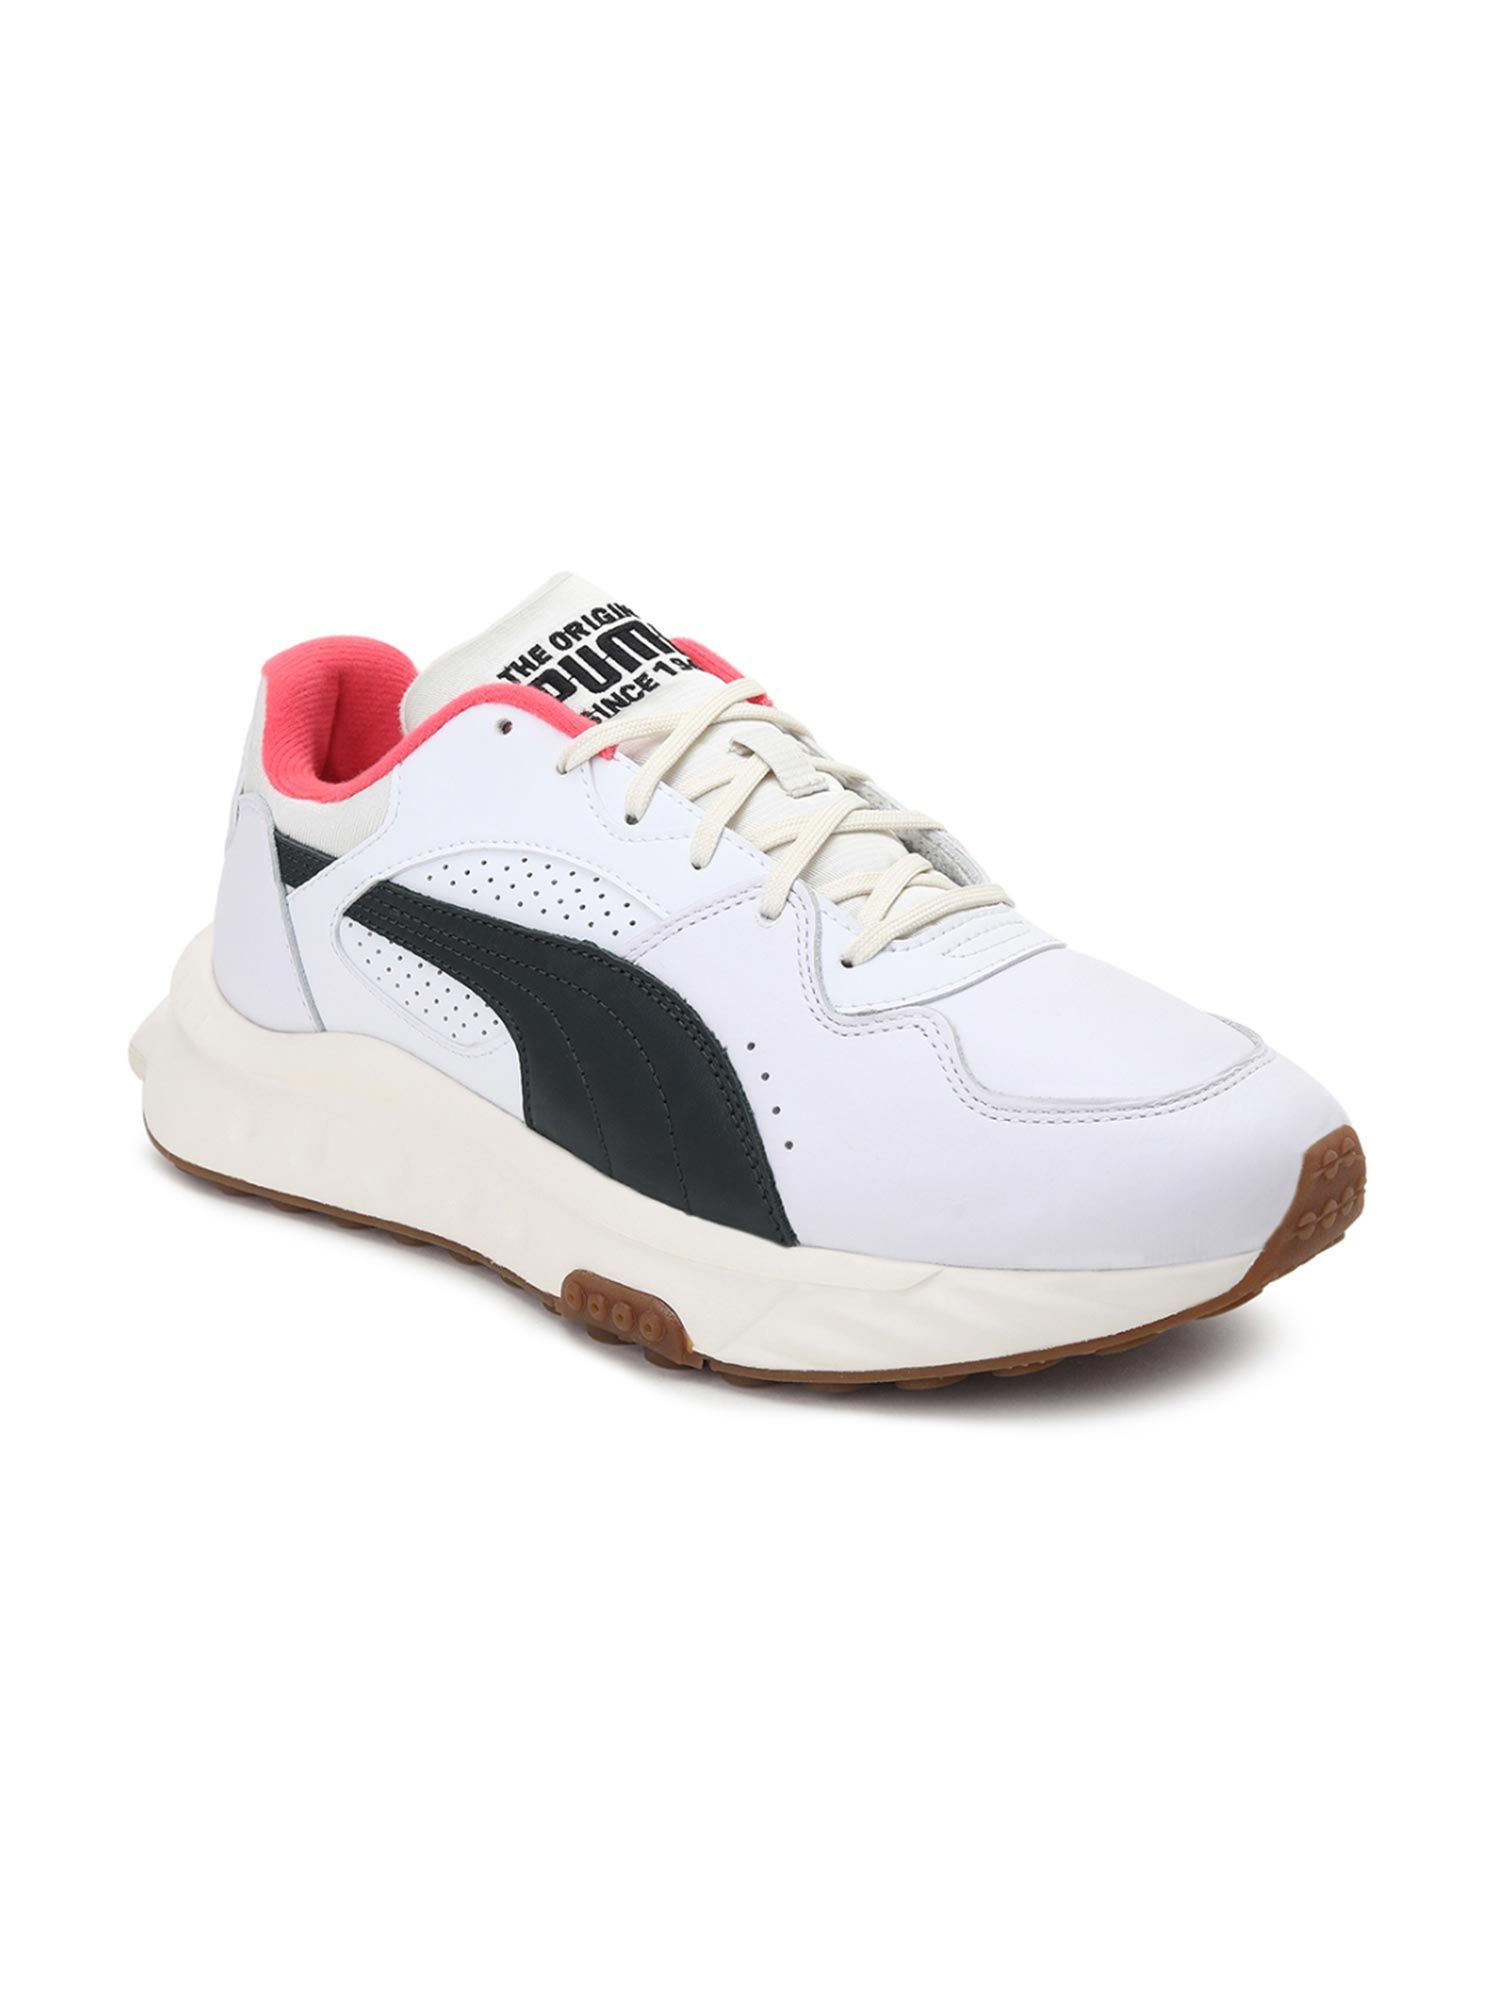 Puma Wild Rider PxP Unisex White Sneakers (UK 11)